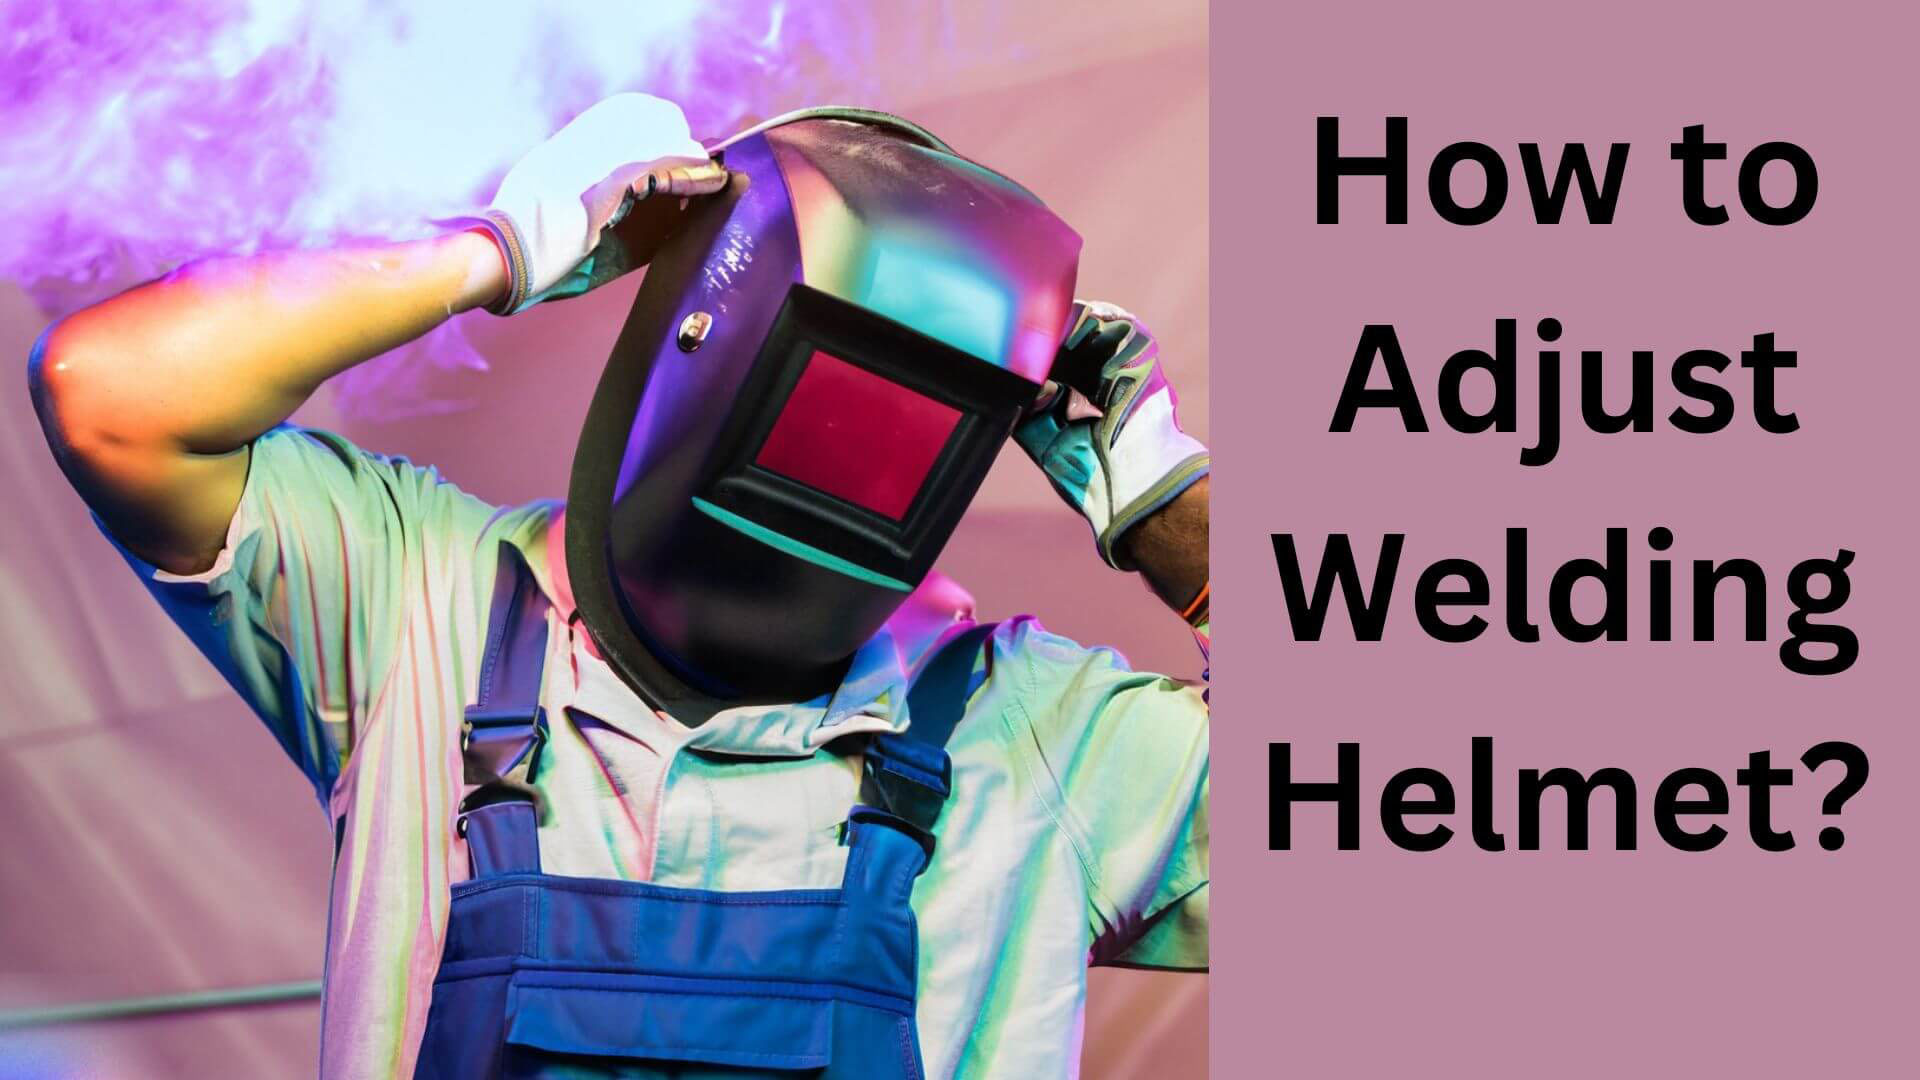 How to Adjust Welding Helmet? Clear Vision, Safe Welds